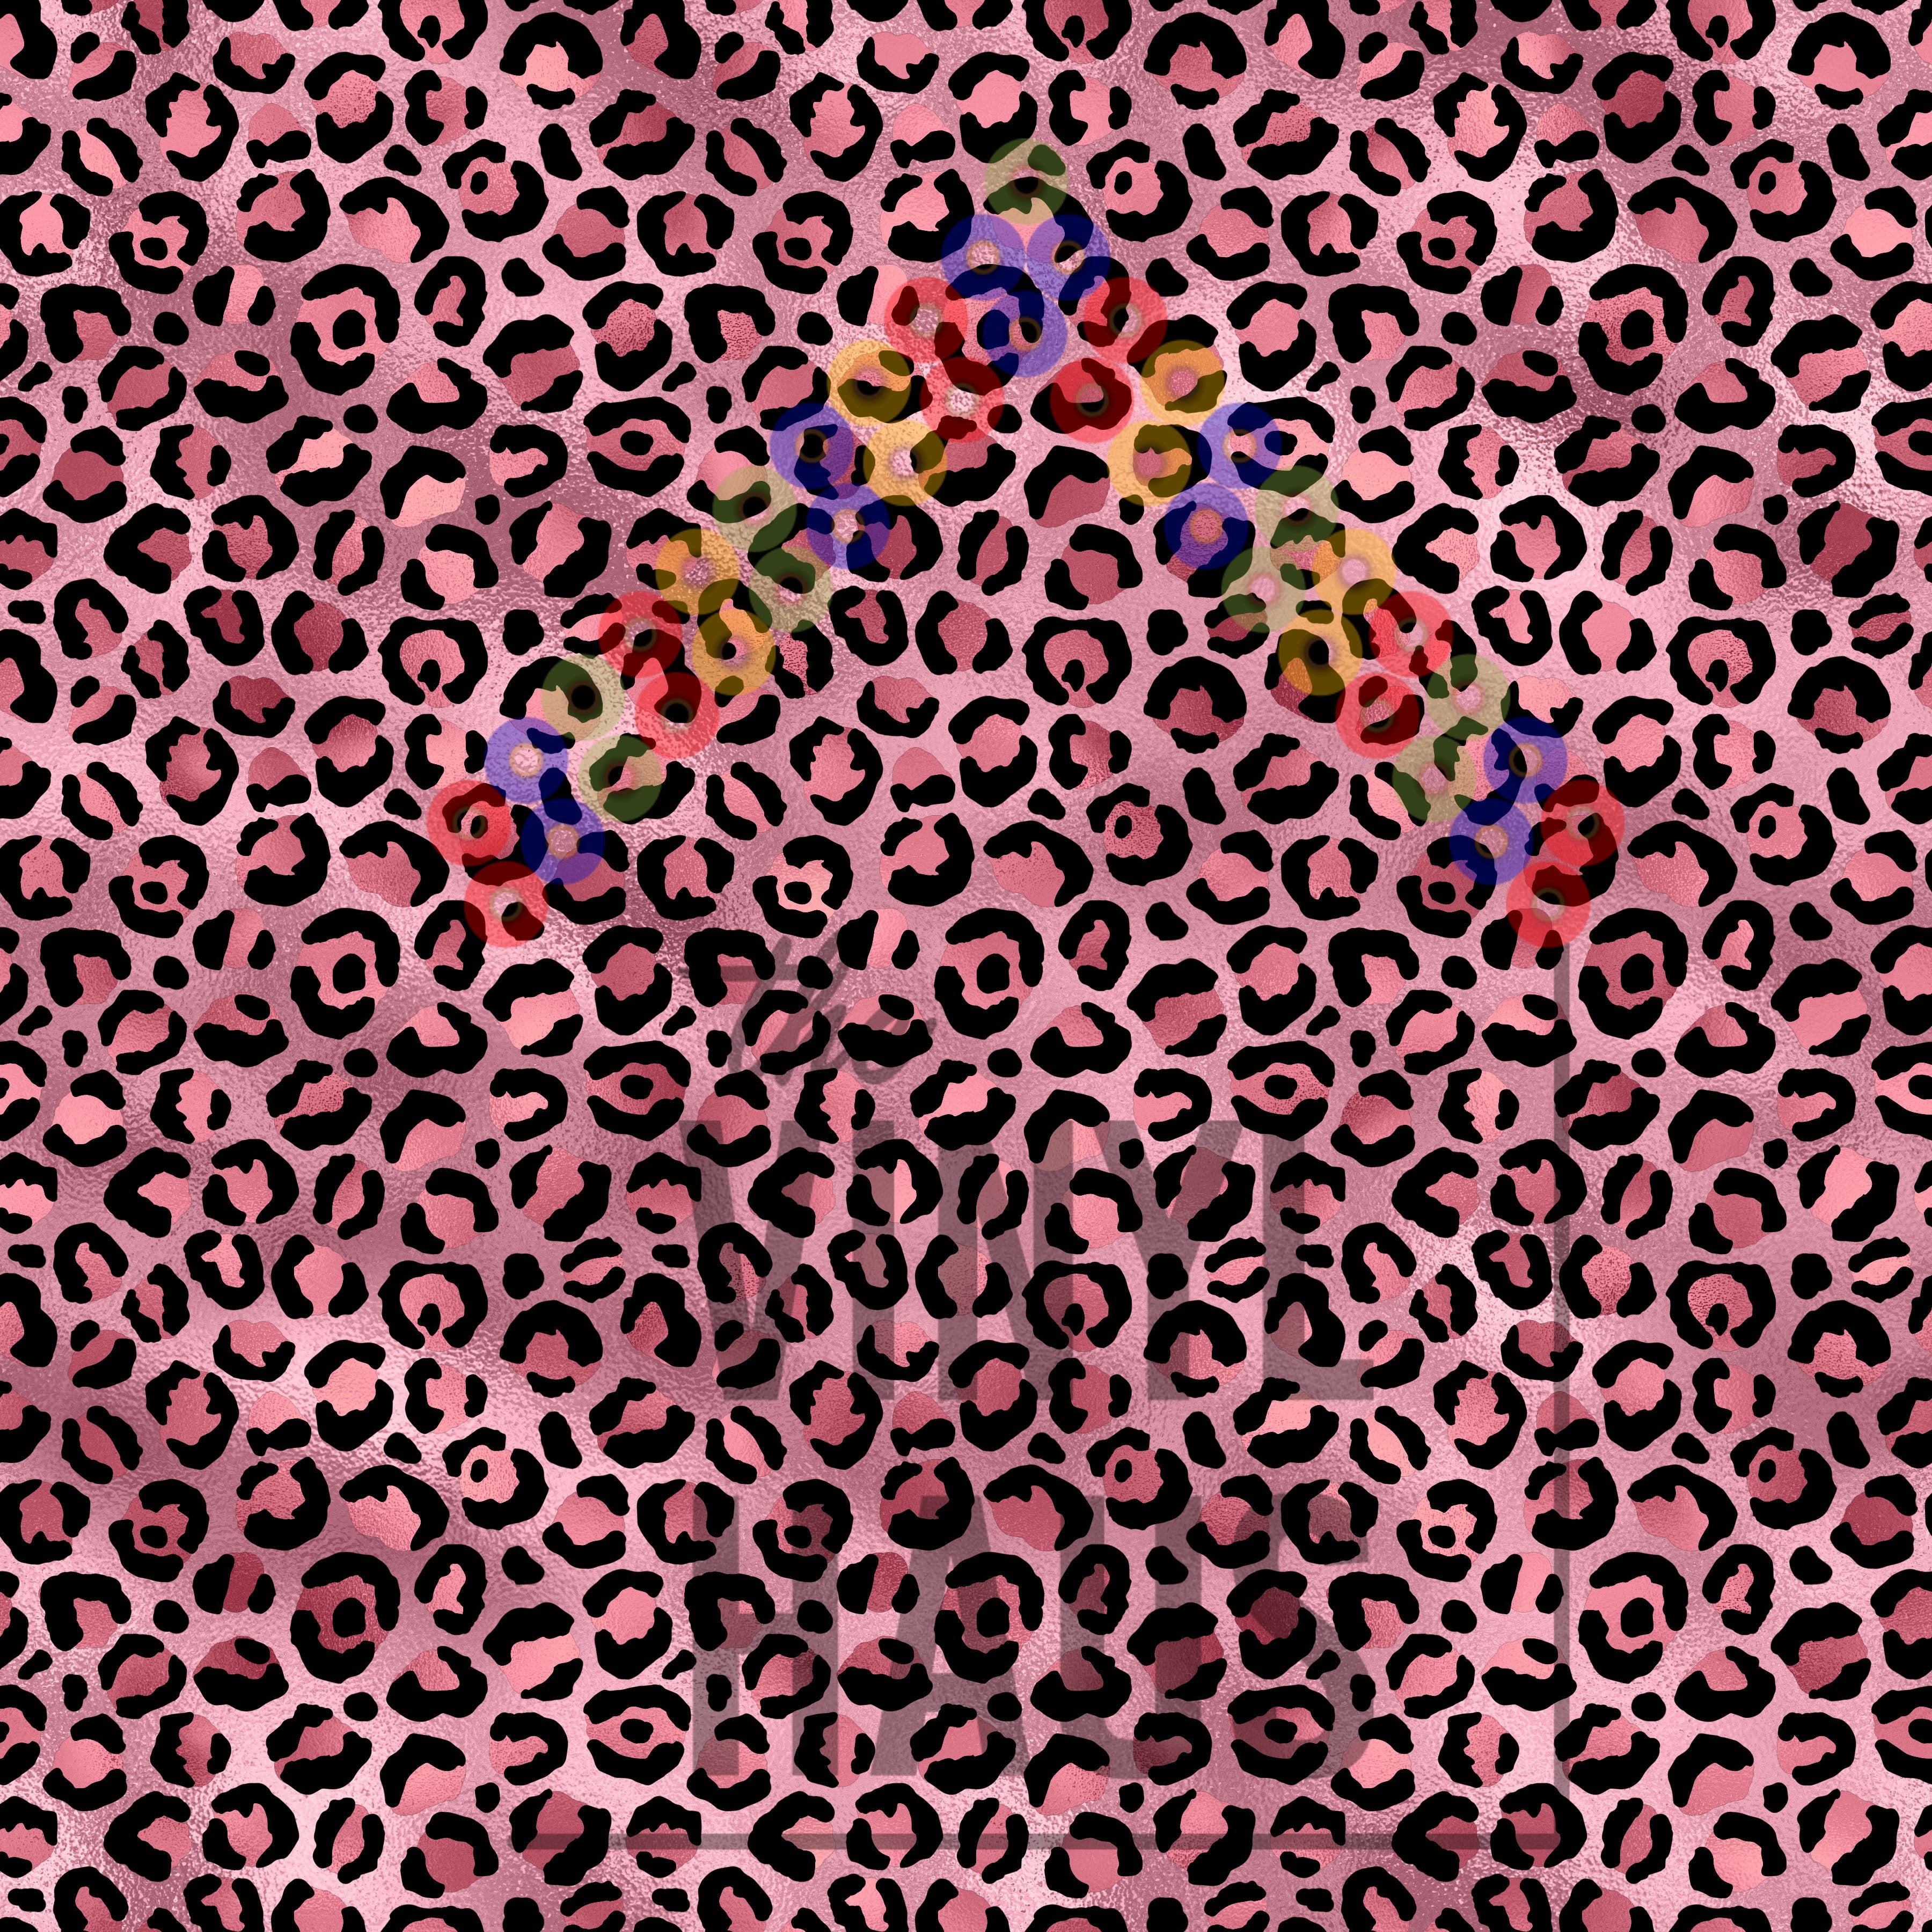 Rose Gold and Pink Cheetah Pattern Vinyl 12" x 12" - The Vinyl Haus